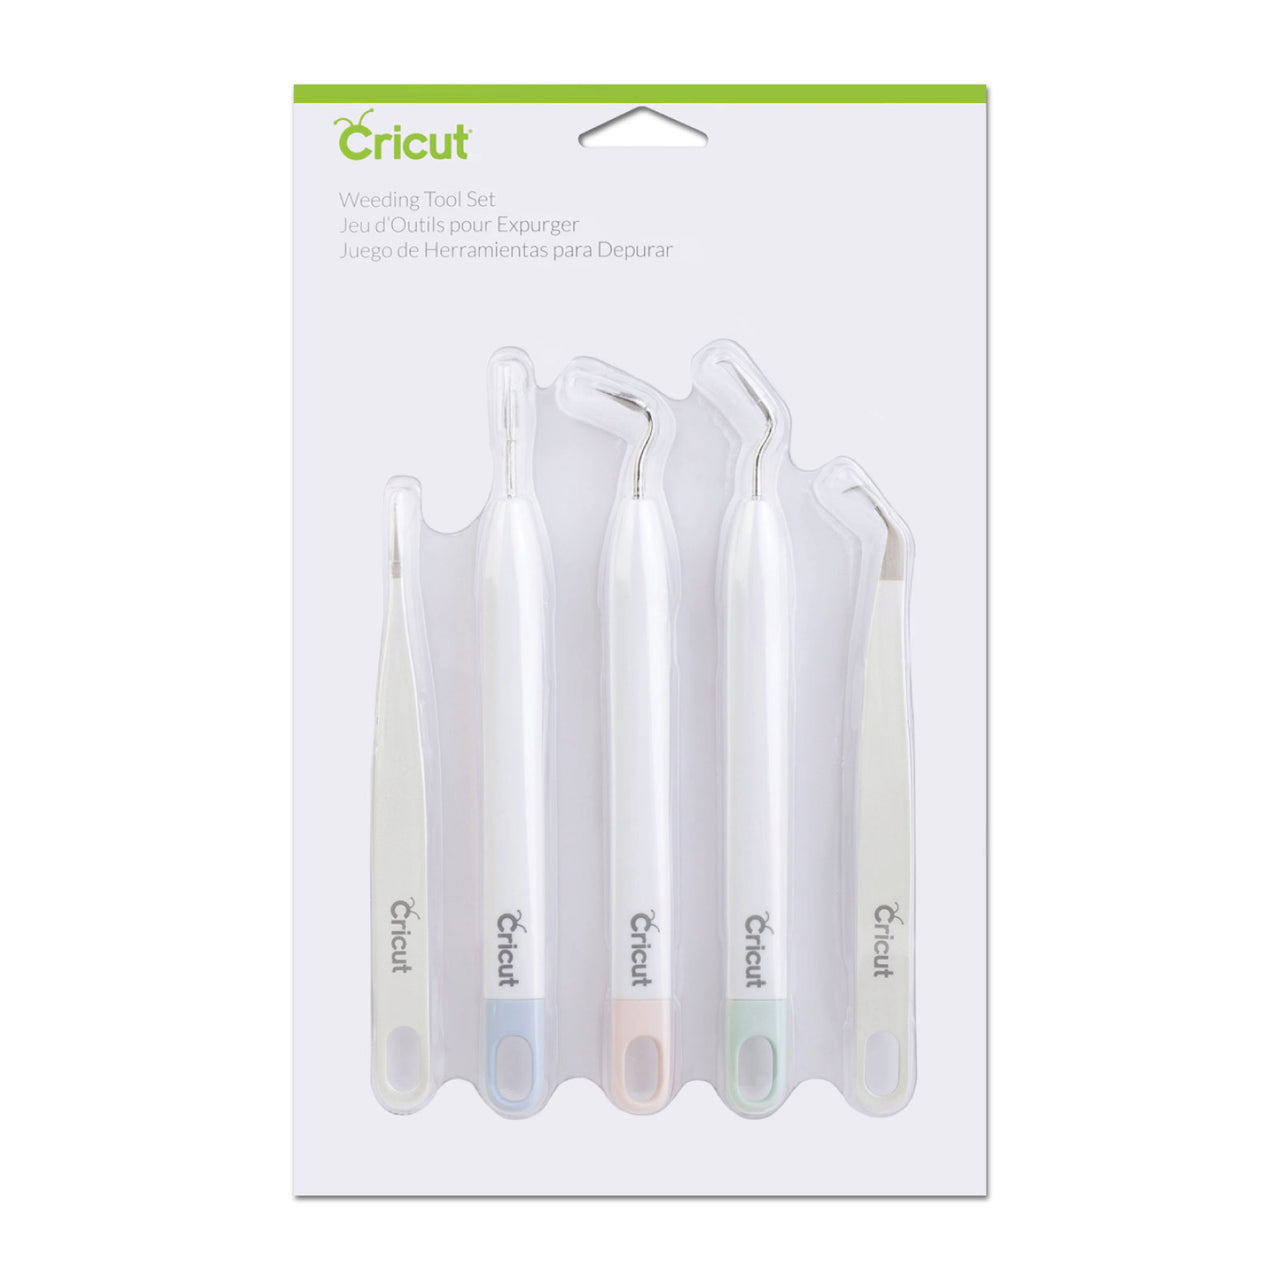 Cricut Weeding Tool Kit - Damaged Package